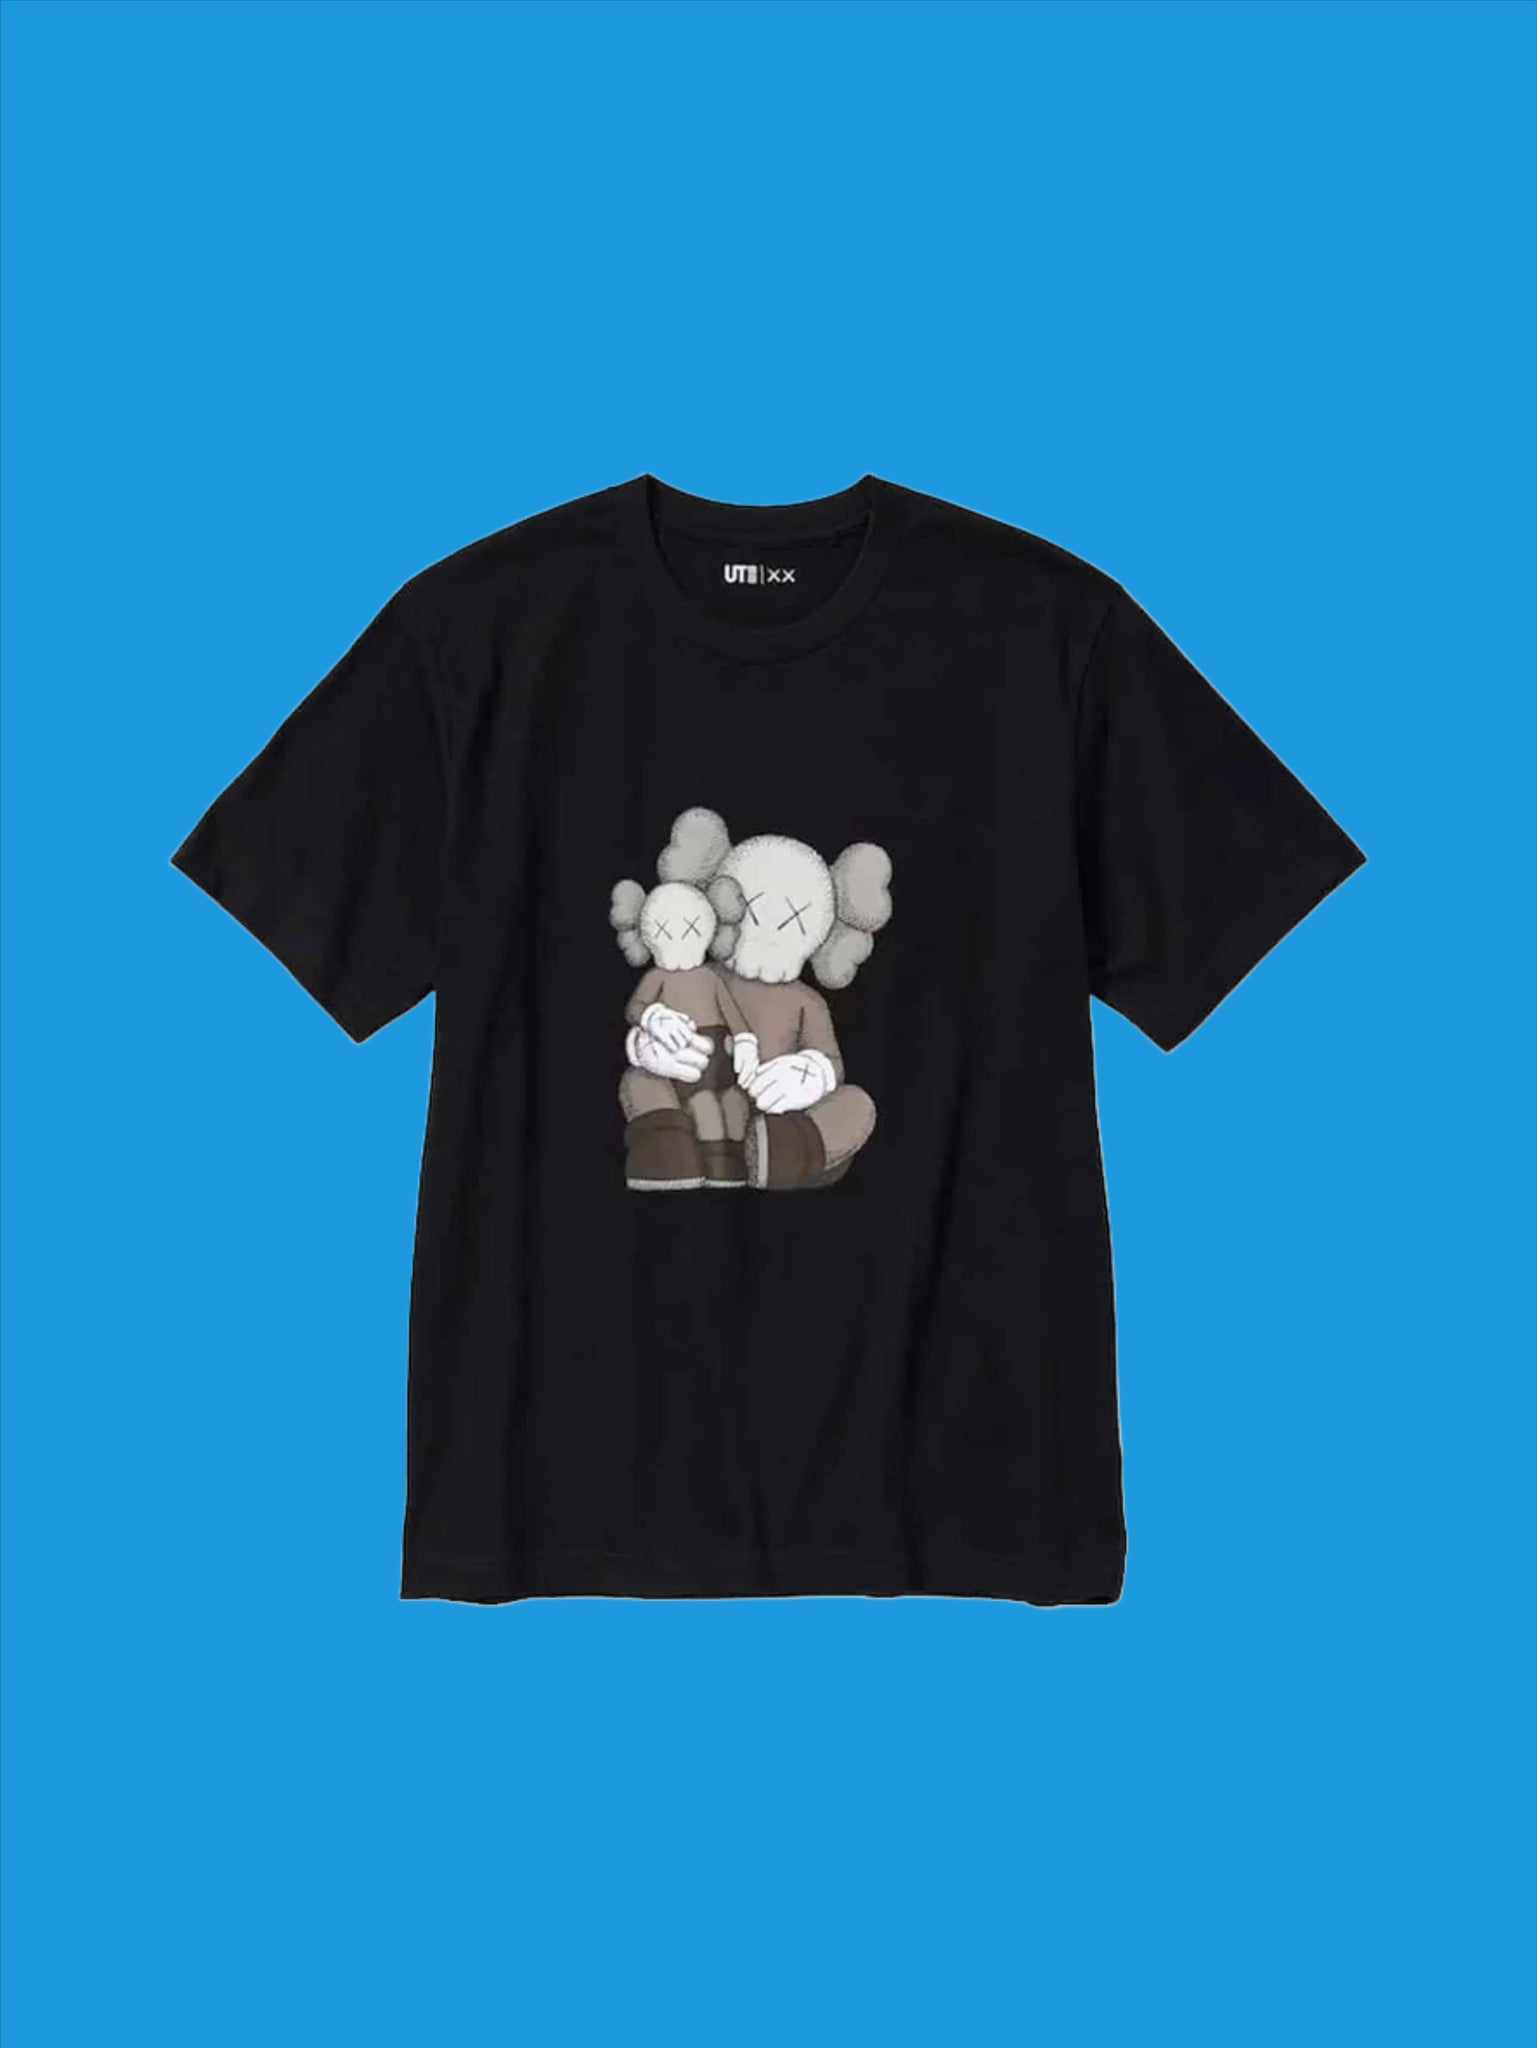 KAWS x Uniqlo UT Short Sleeve Graphic T-shirt Black in Melbourne, Australia - Prior